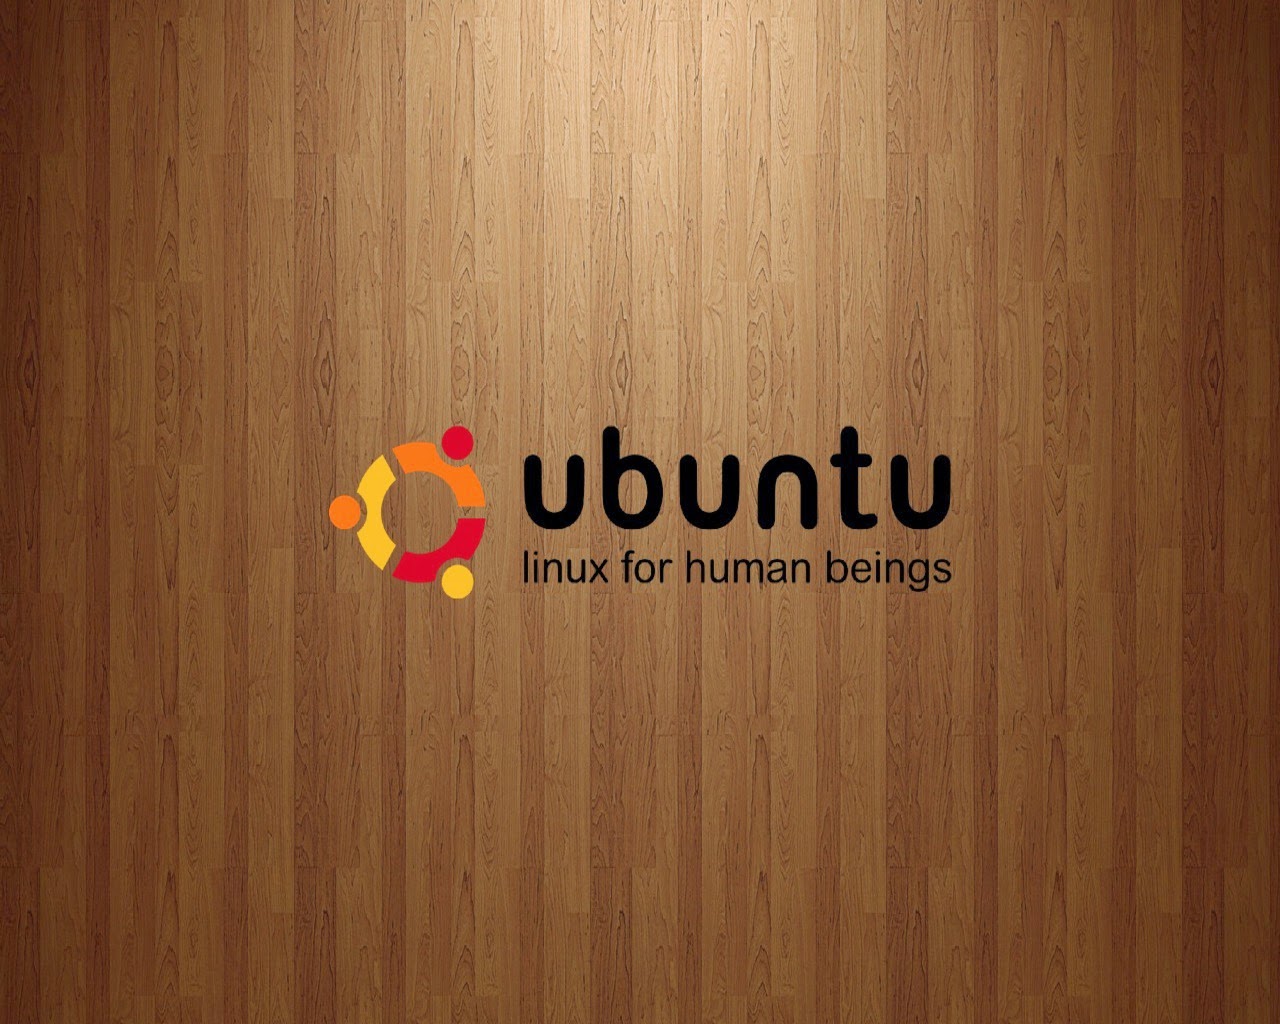 http://3.bp.blogspot.com/-RvcfEw5EVHA/T_76xvkW1-I/AAAAAAAAUNk/PBYgRPEUrU8/s1600/download-ubuntu-stunning-uploads-content-wallpapers.jpg